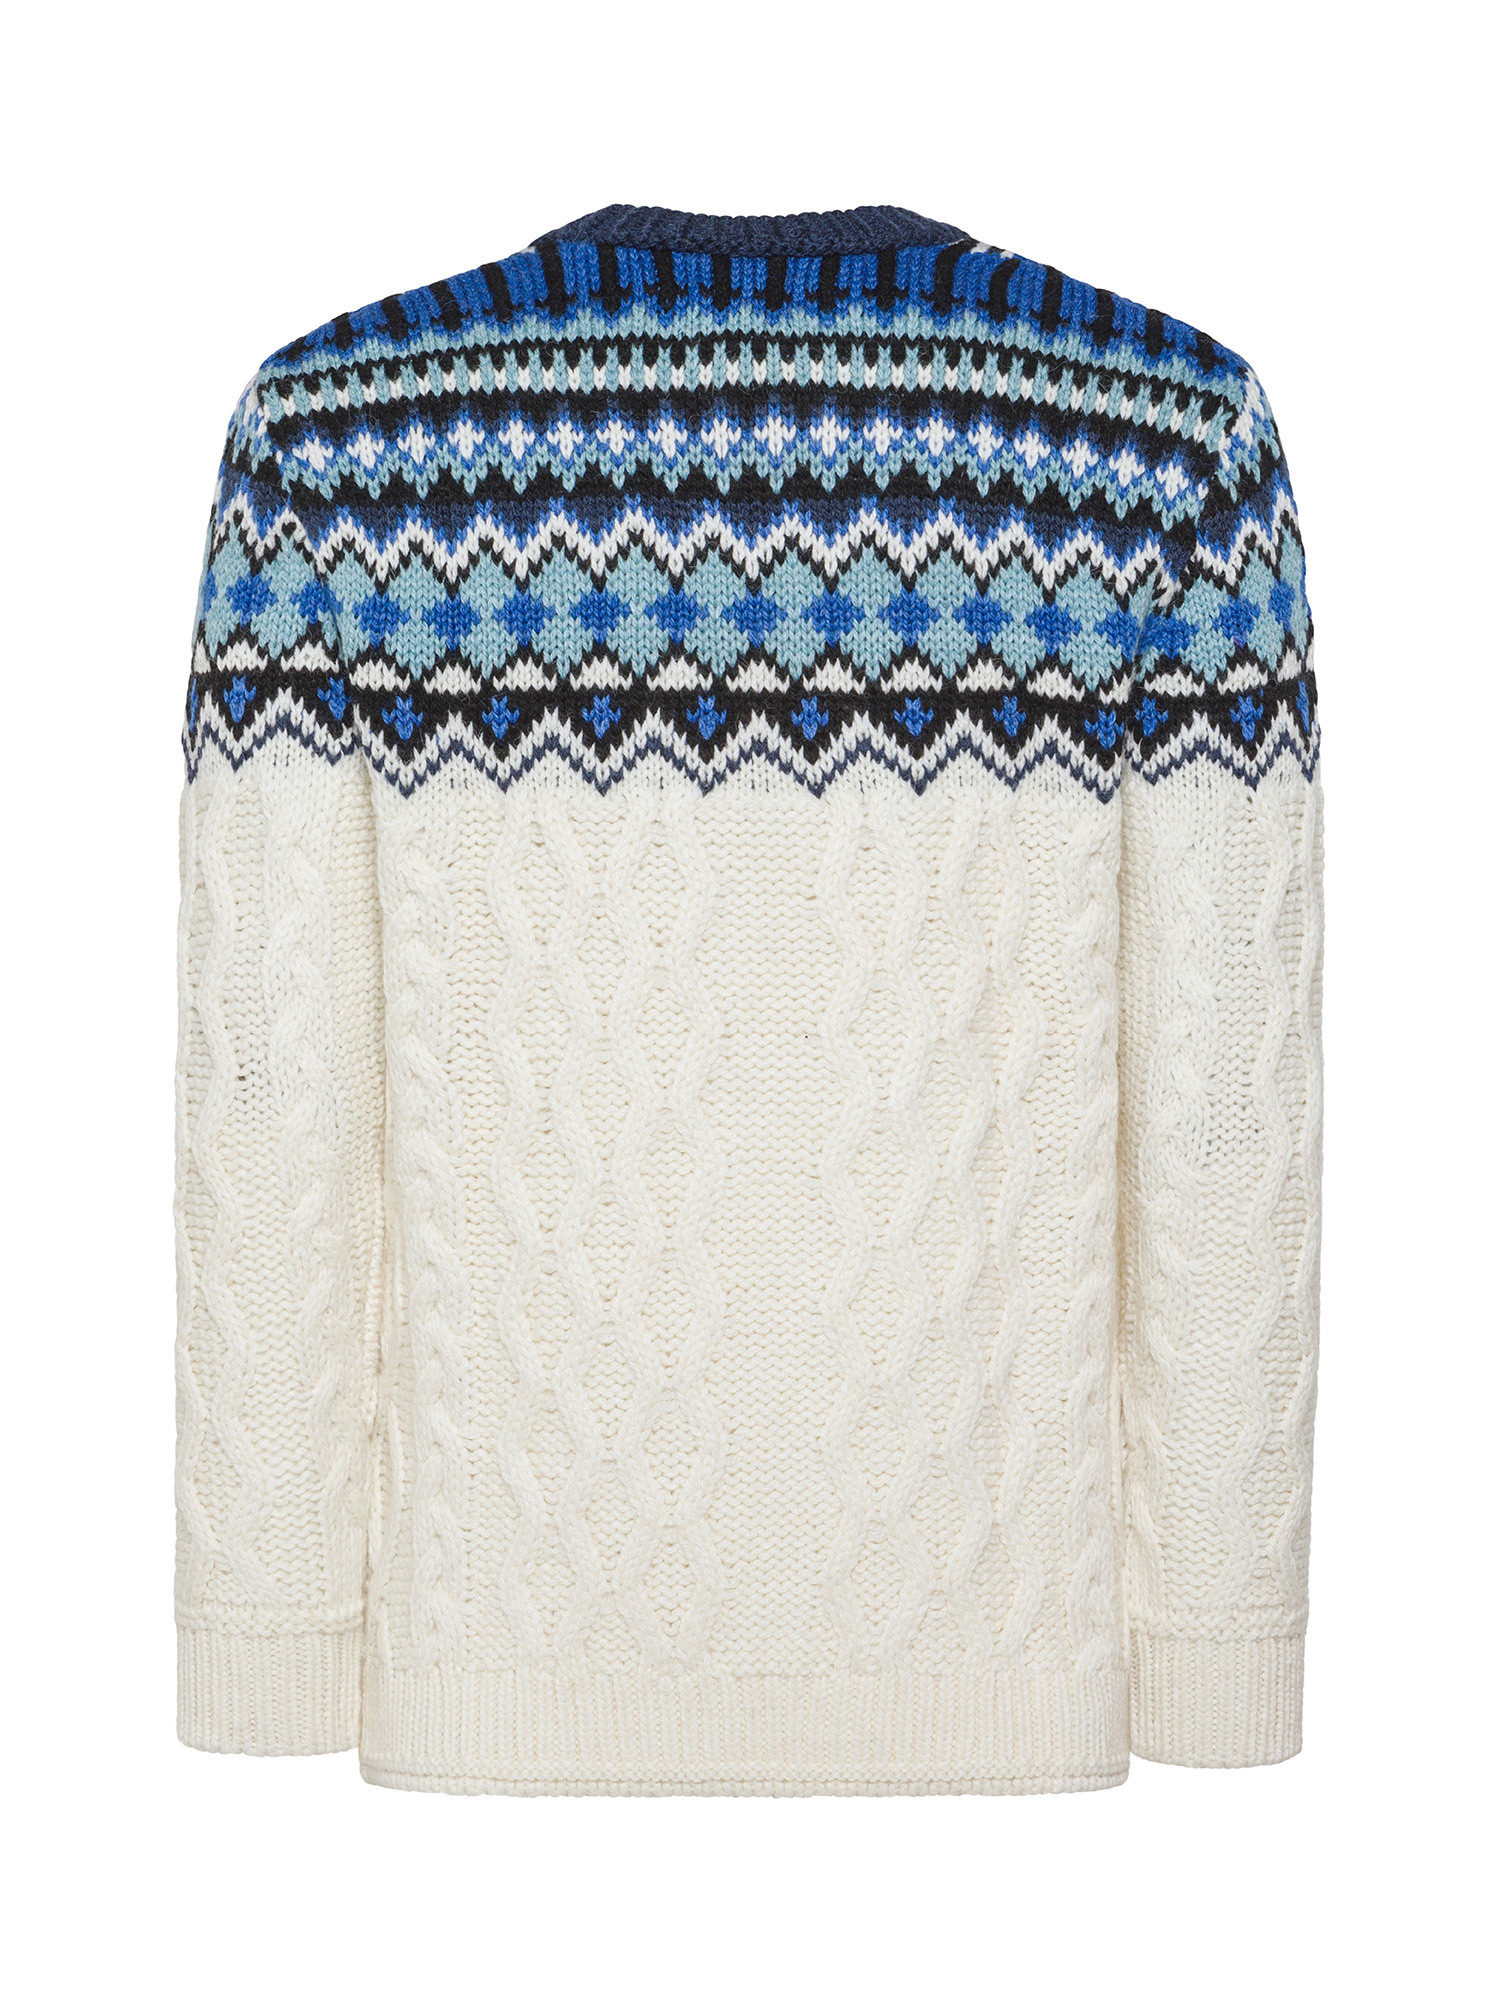 Superdry - Fair Isle crewneck sweater, White, large image number 1